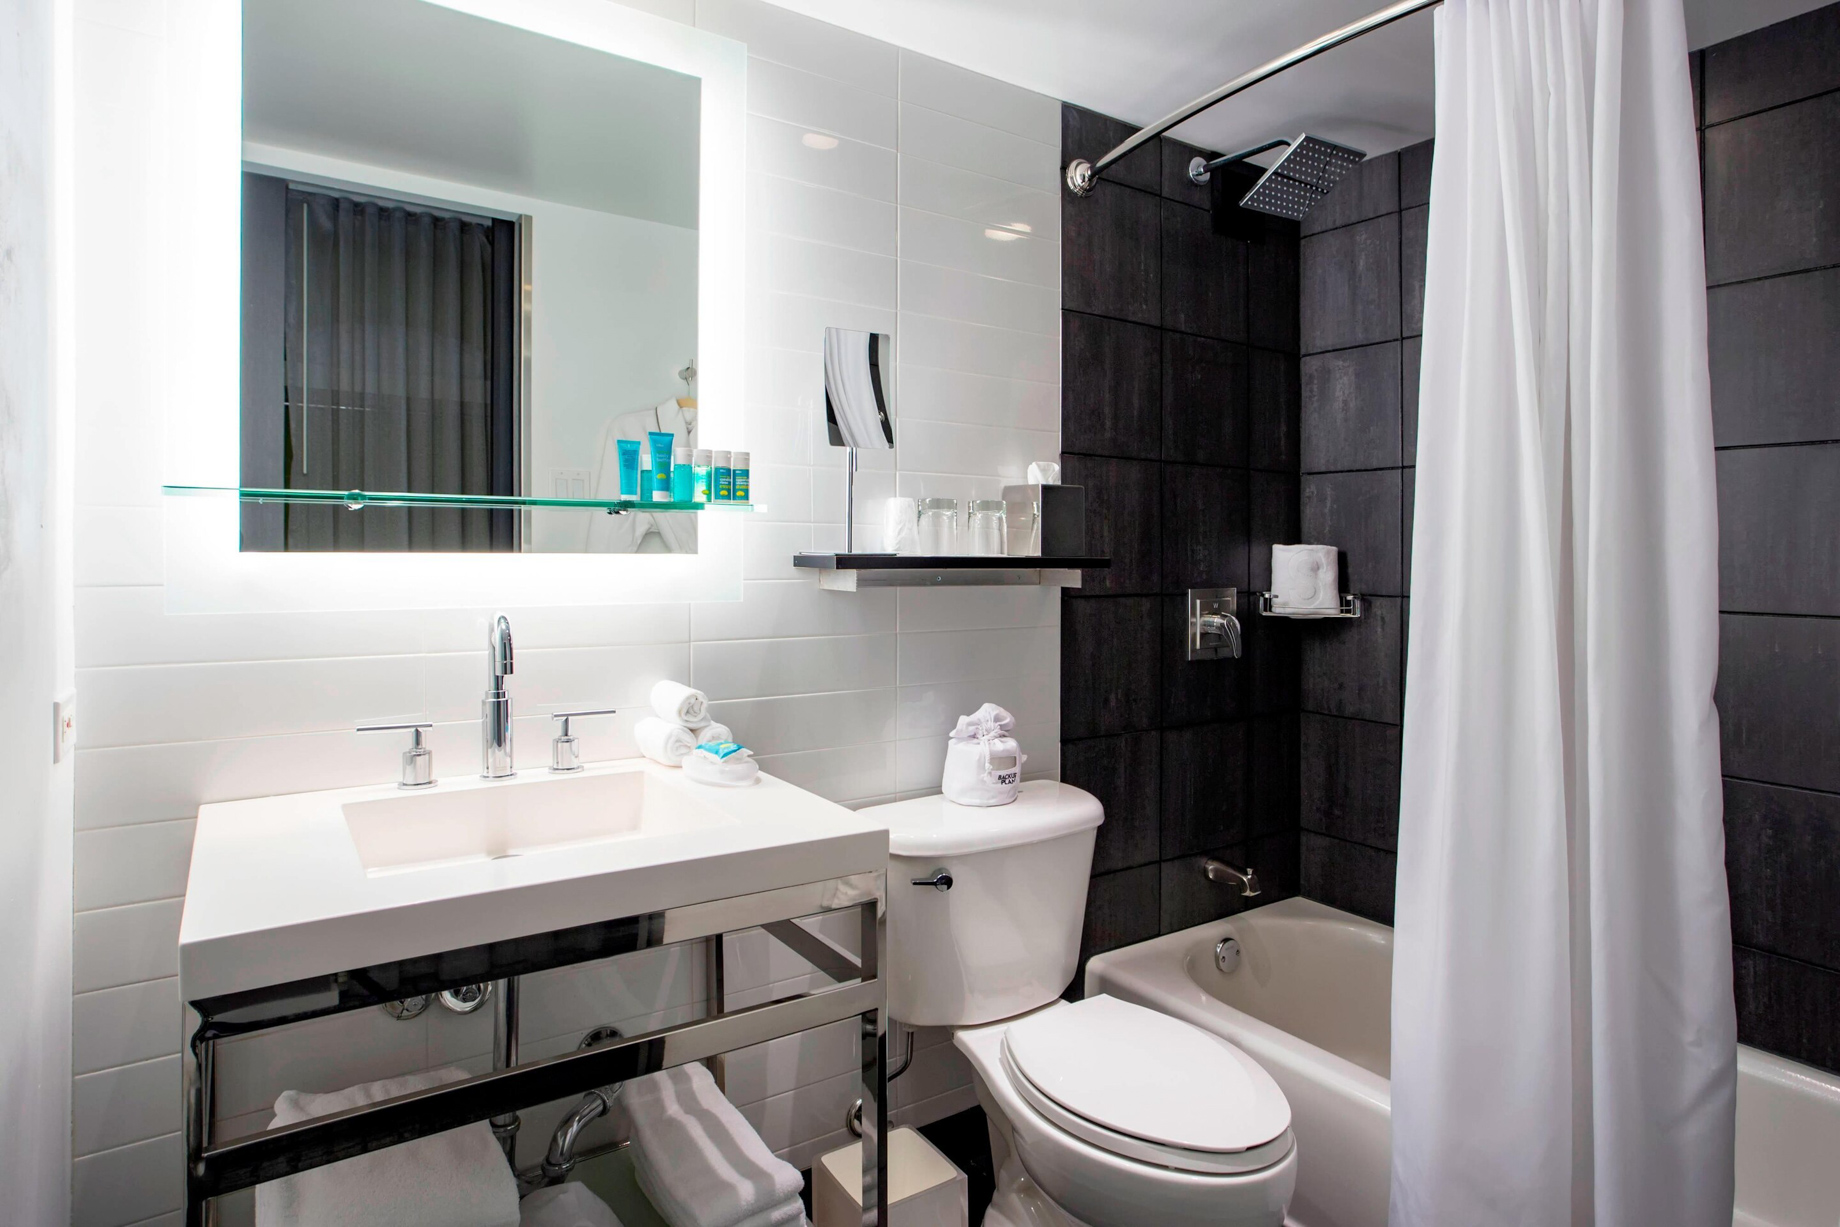 W Chicago Lakeshore Hotel - Chicago, IL, USA - Wonderful Guest Bathroom Vanity